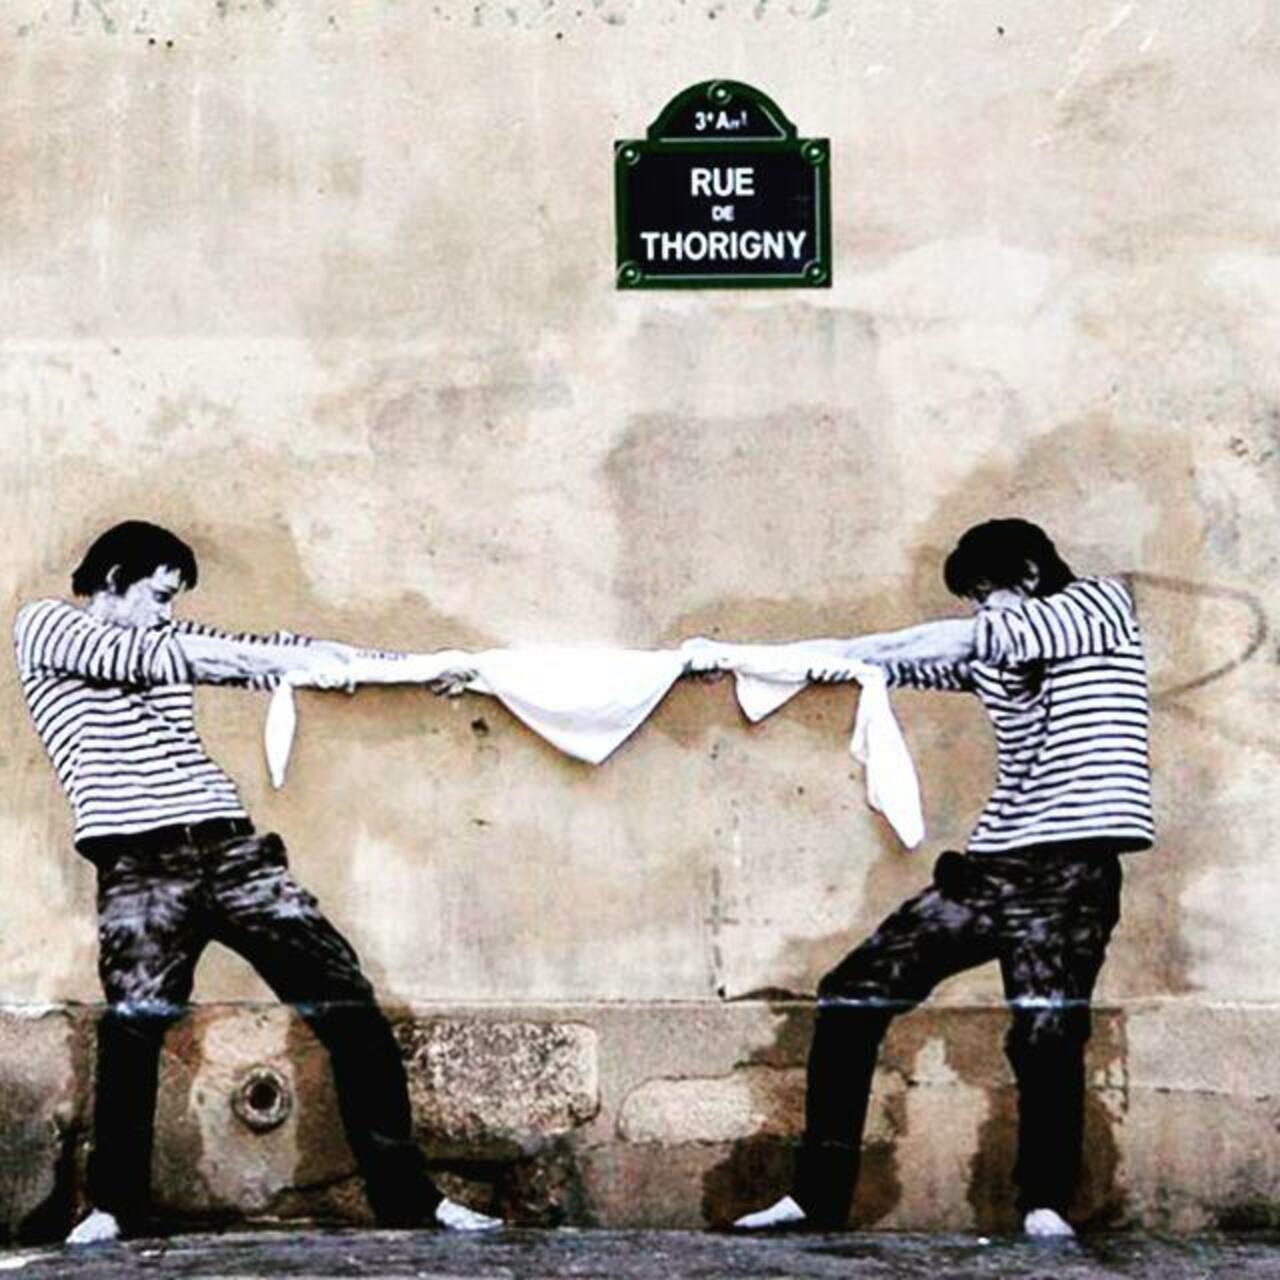 RT @streetcnina: Levalet #paris #photo #stencil #urbanart #graffiti #mural #sprayart #murales #streetart http://t.co/Hqm5XJW34I